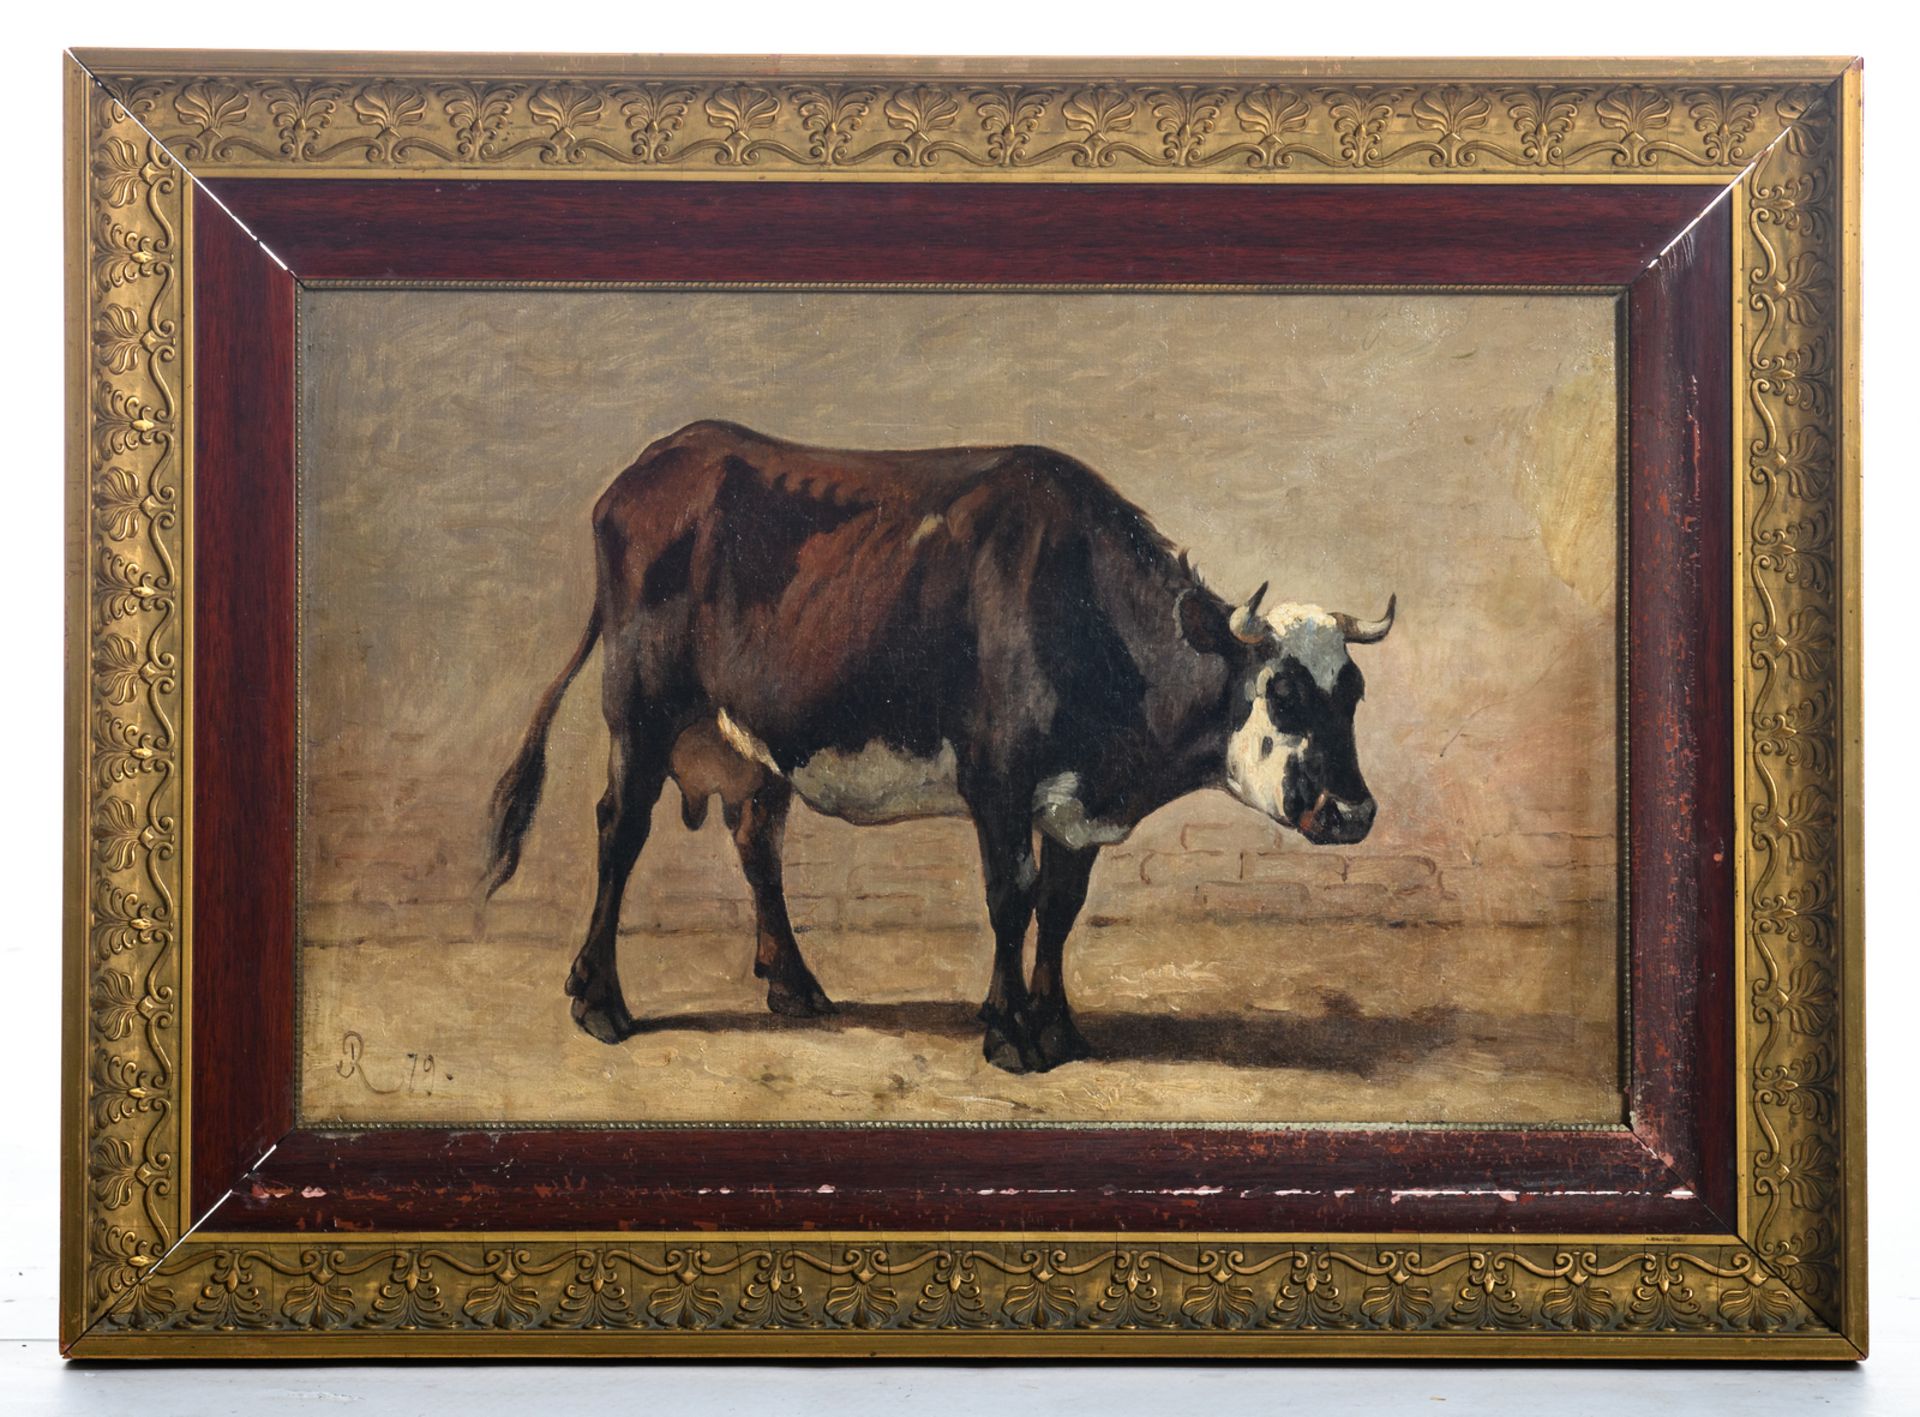 Monogrammed (J.R.?), a portrait of a price cow, oil on canvas, dated (18)79, 32,5 x 50 cm - Bild 2 aus 4